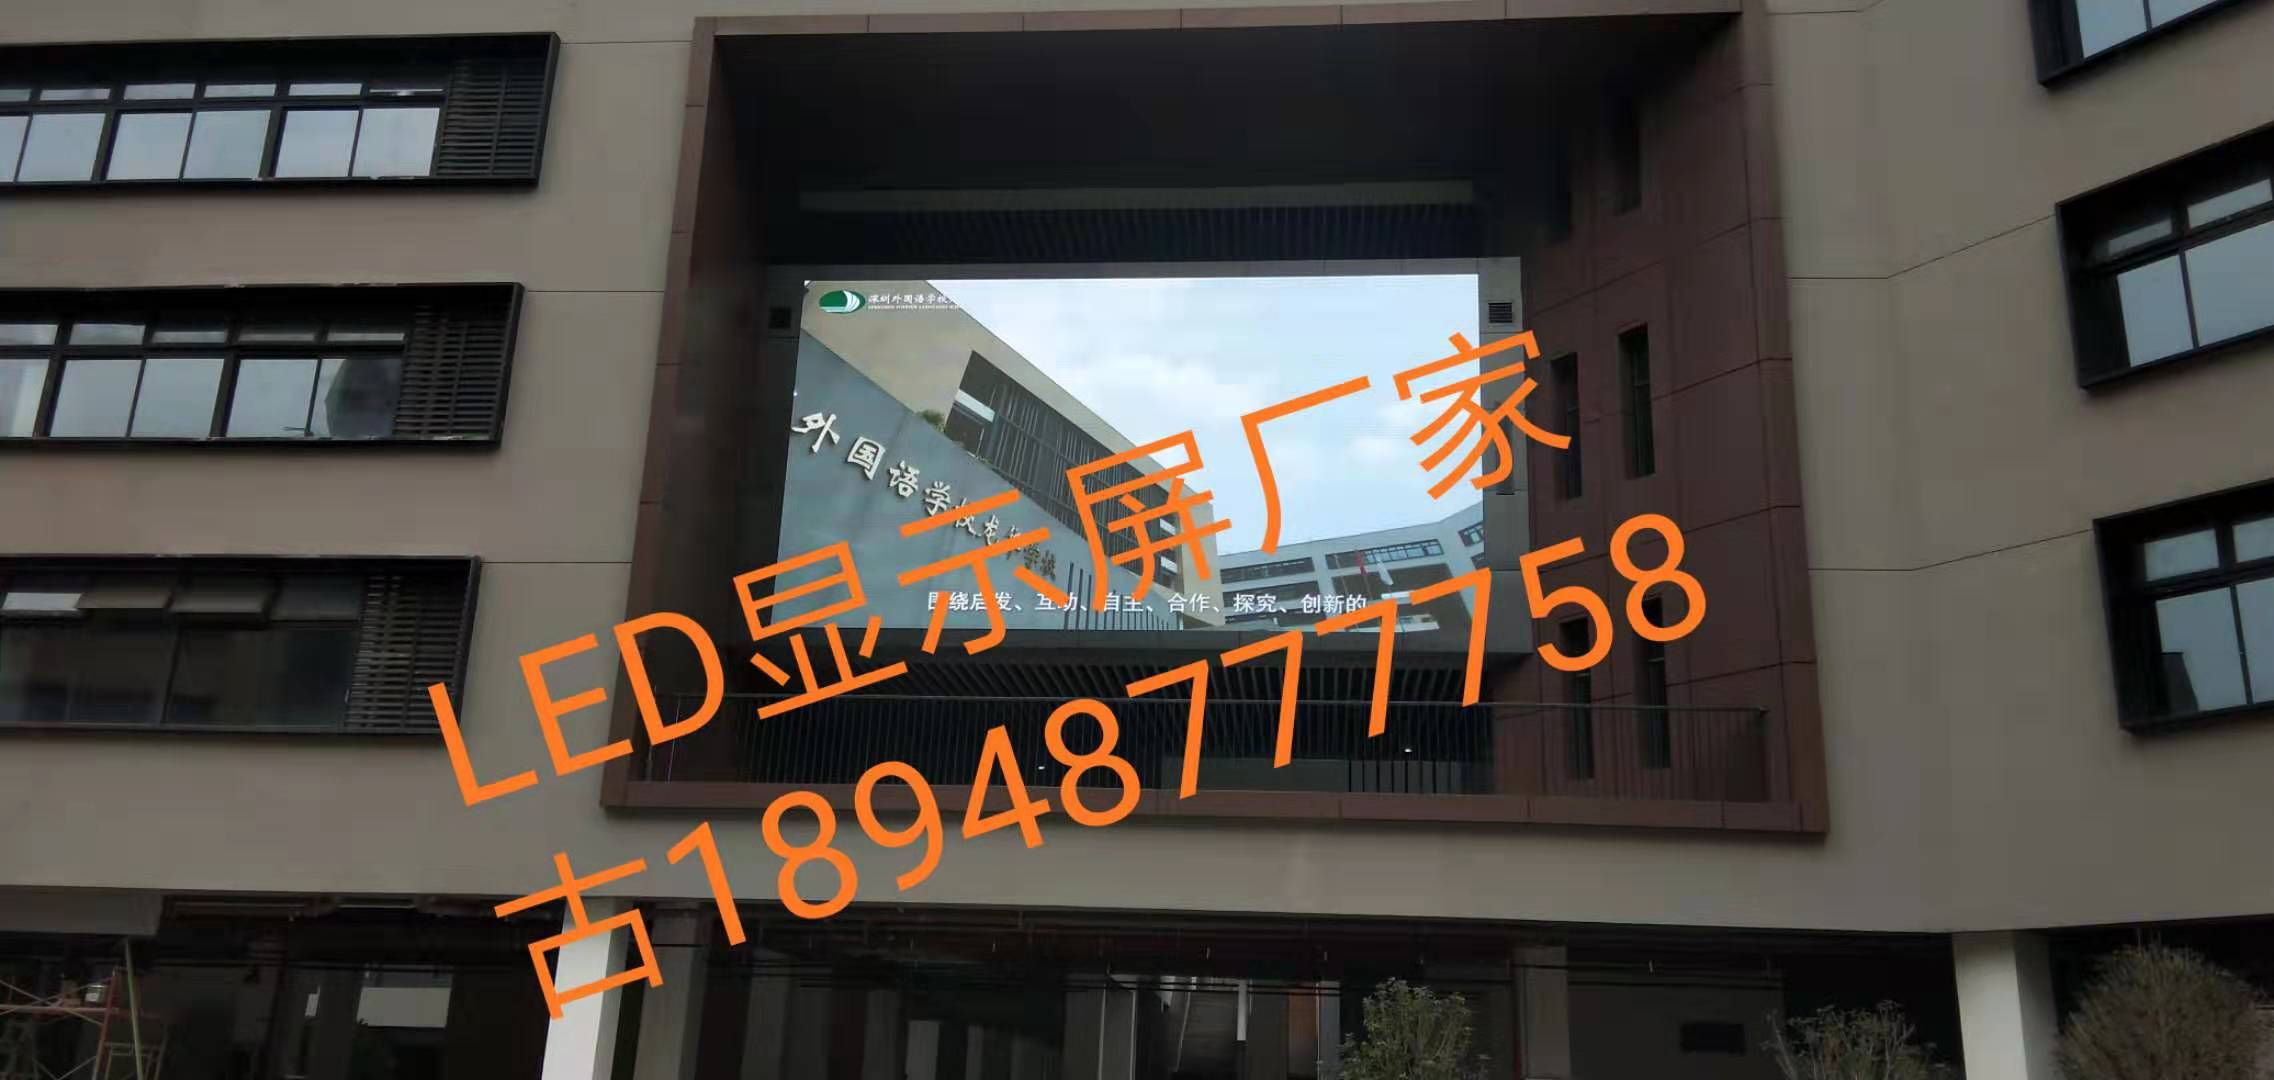 LED显示屏节能改造工程的厂家五华县有吗图片